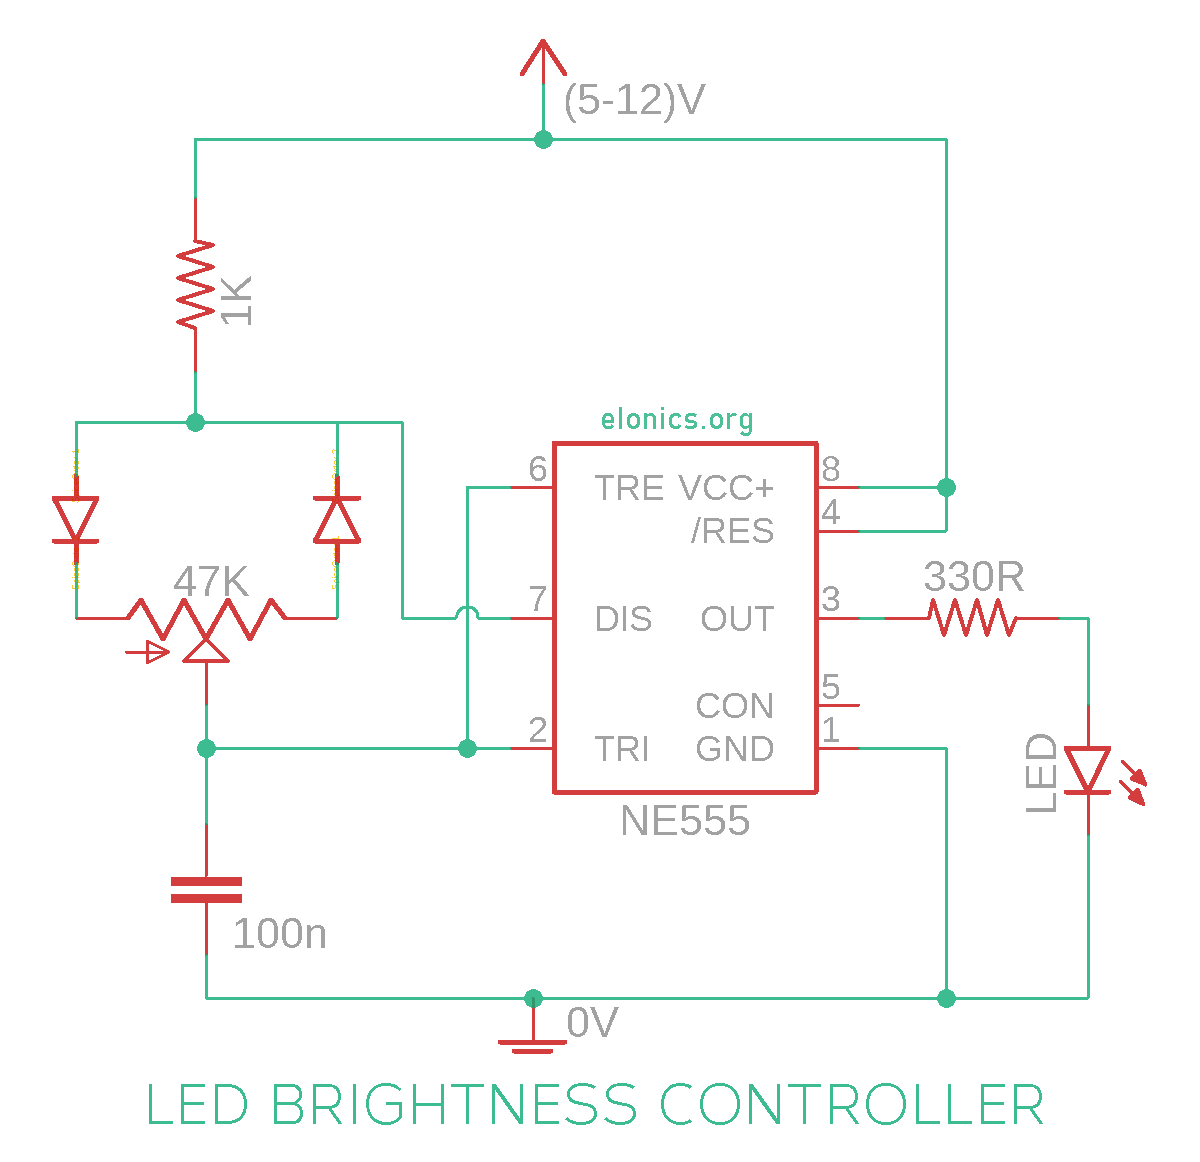 tilbede Elektriker Skæbne LED Dimmer and DC Motor Speed Controller Circuit Using PWM Technique